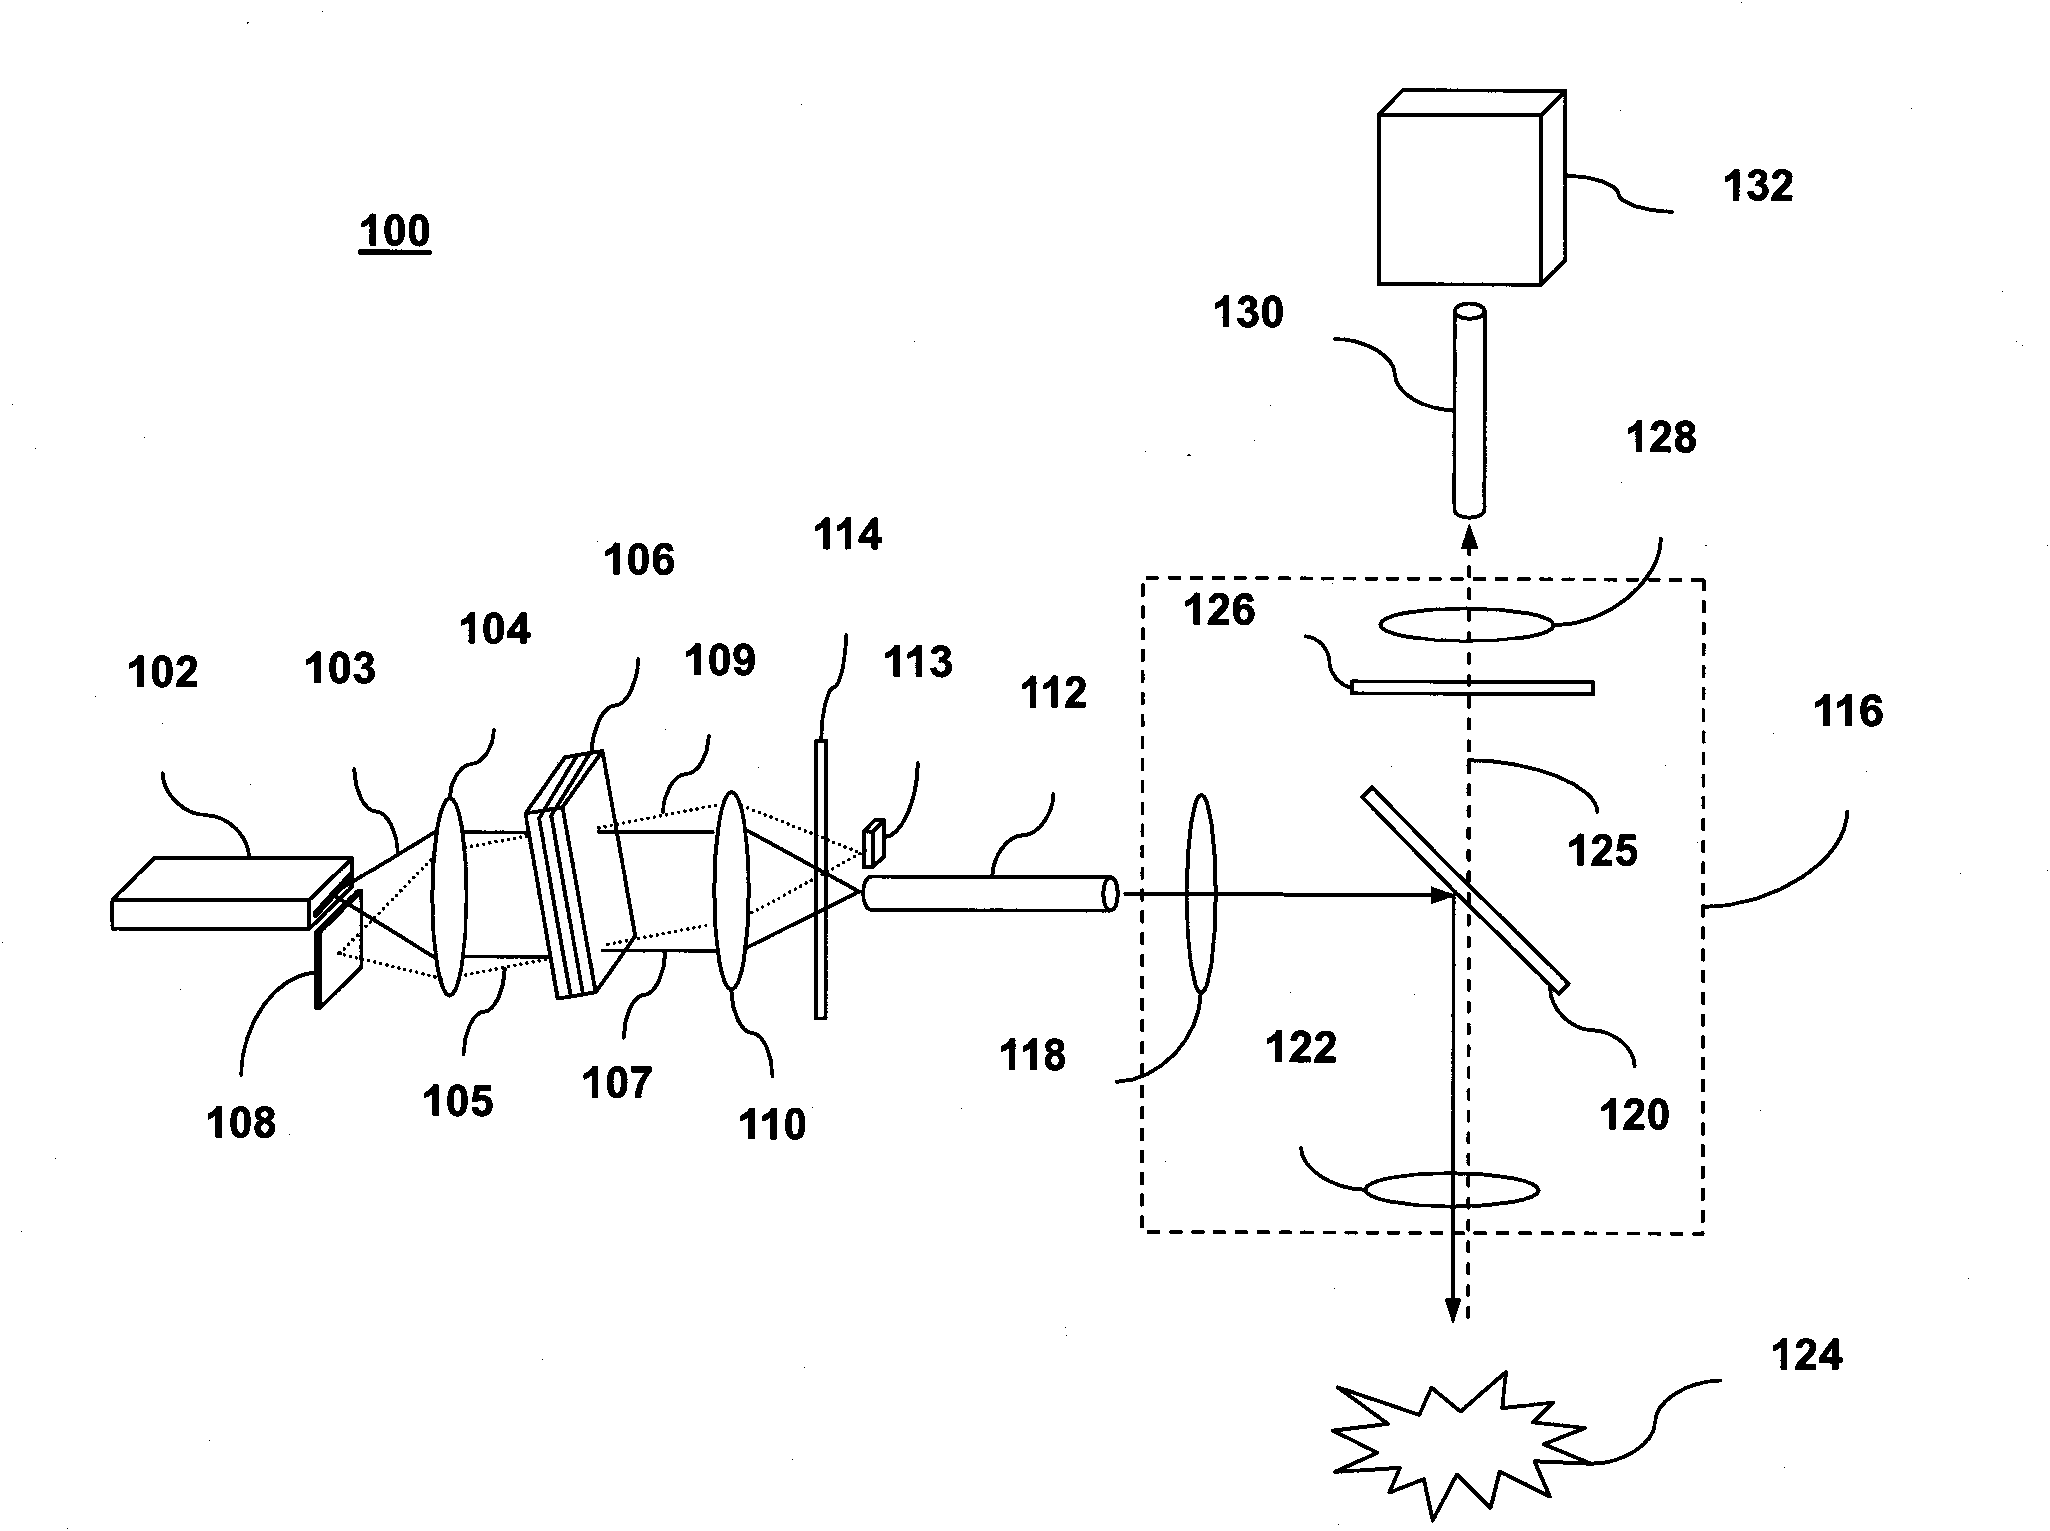 Raman spectroscopic apparatus and method for measuring raman spectrum containing fluorescent materials